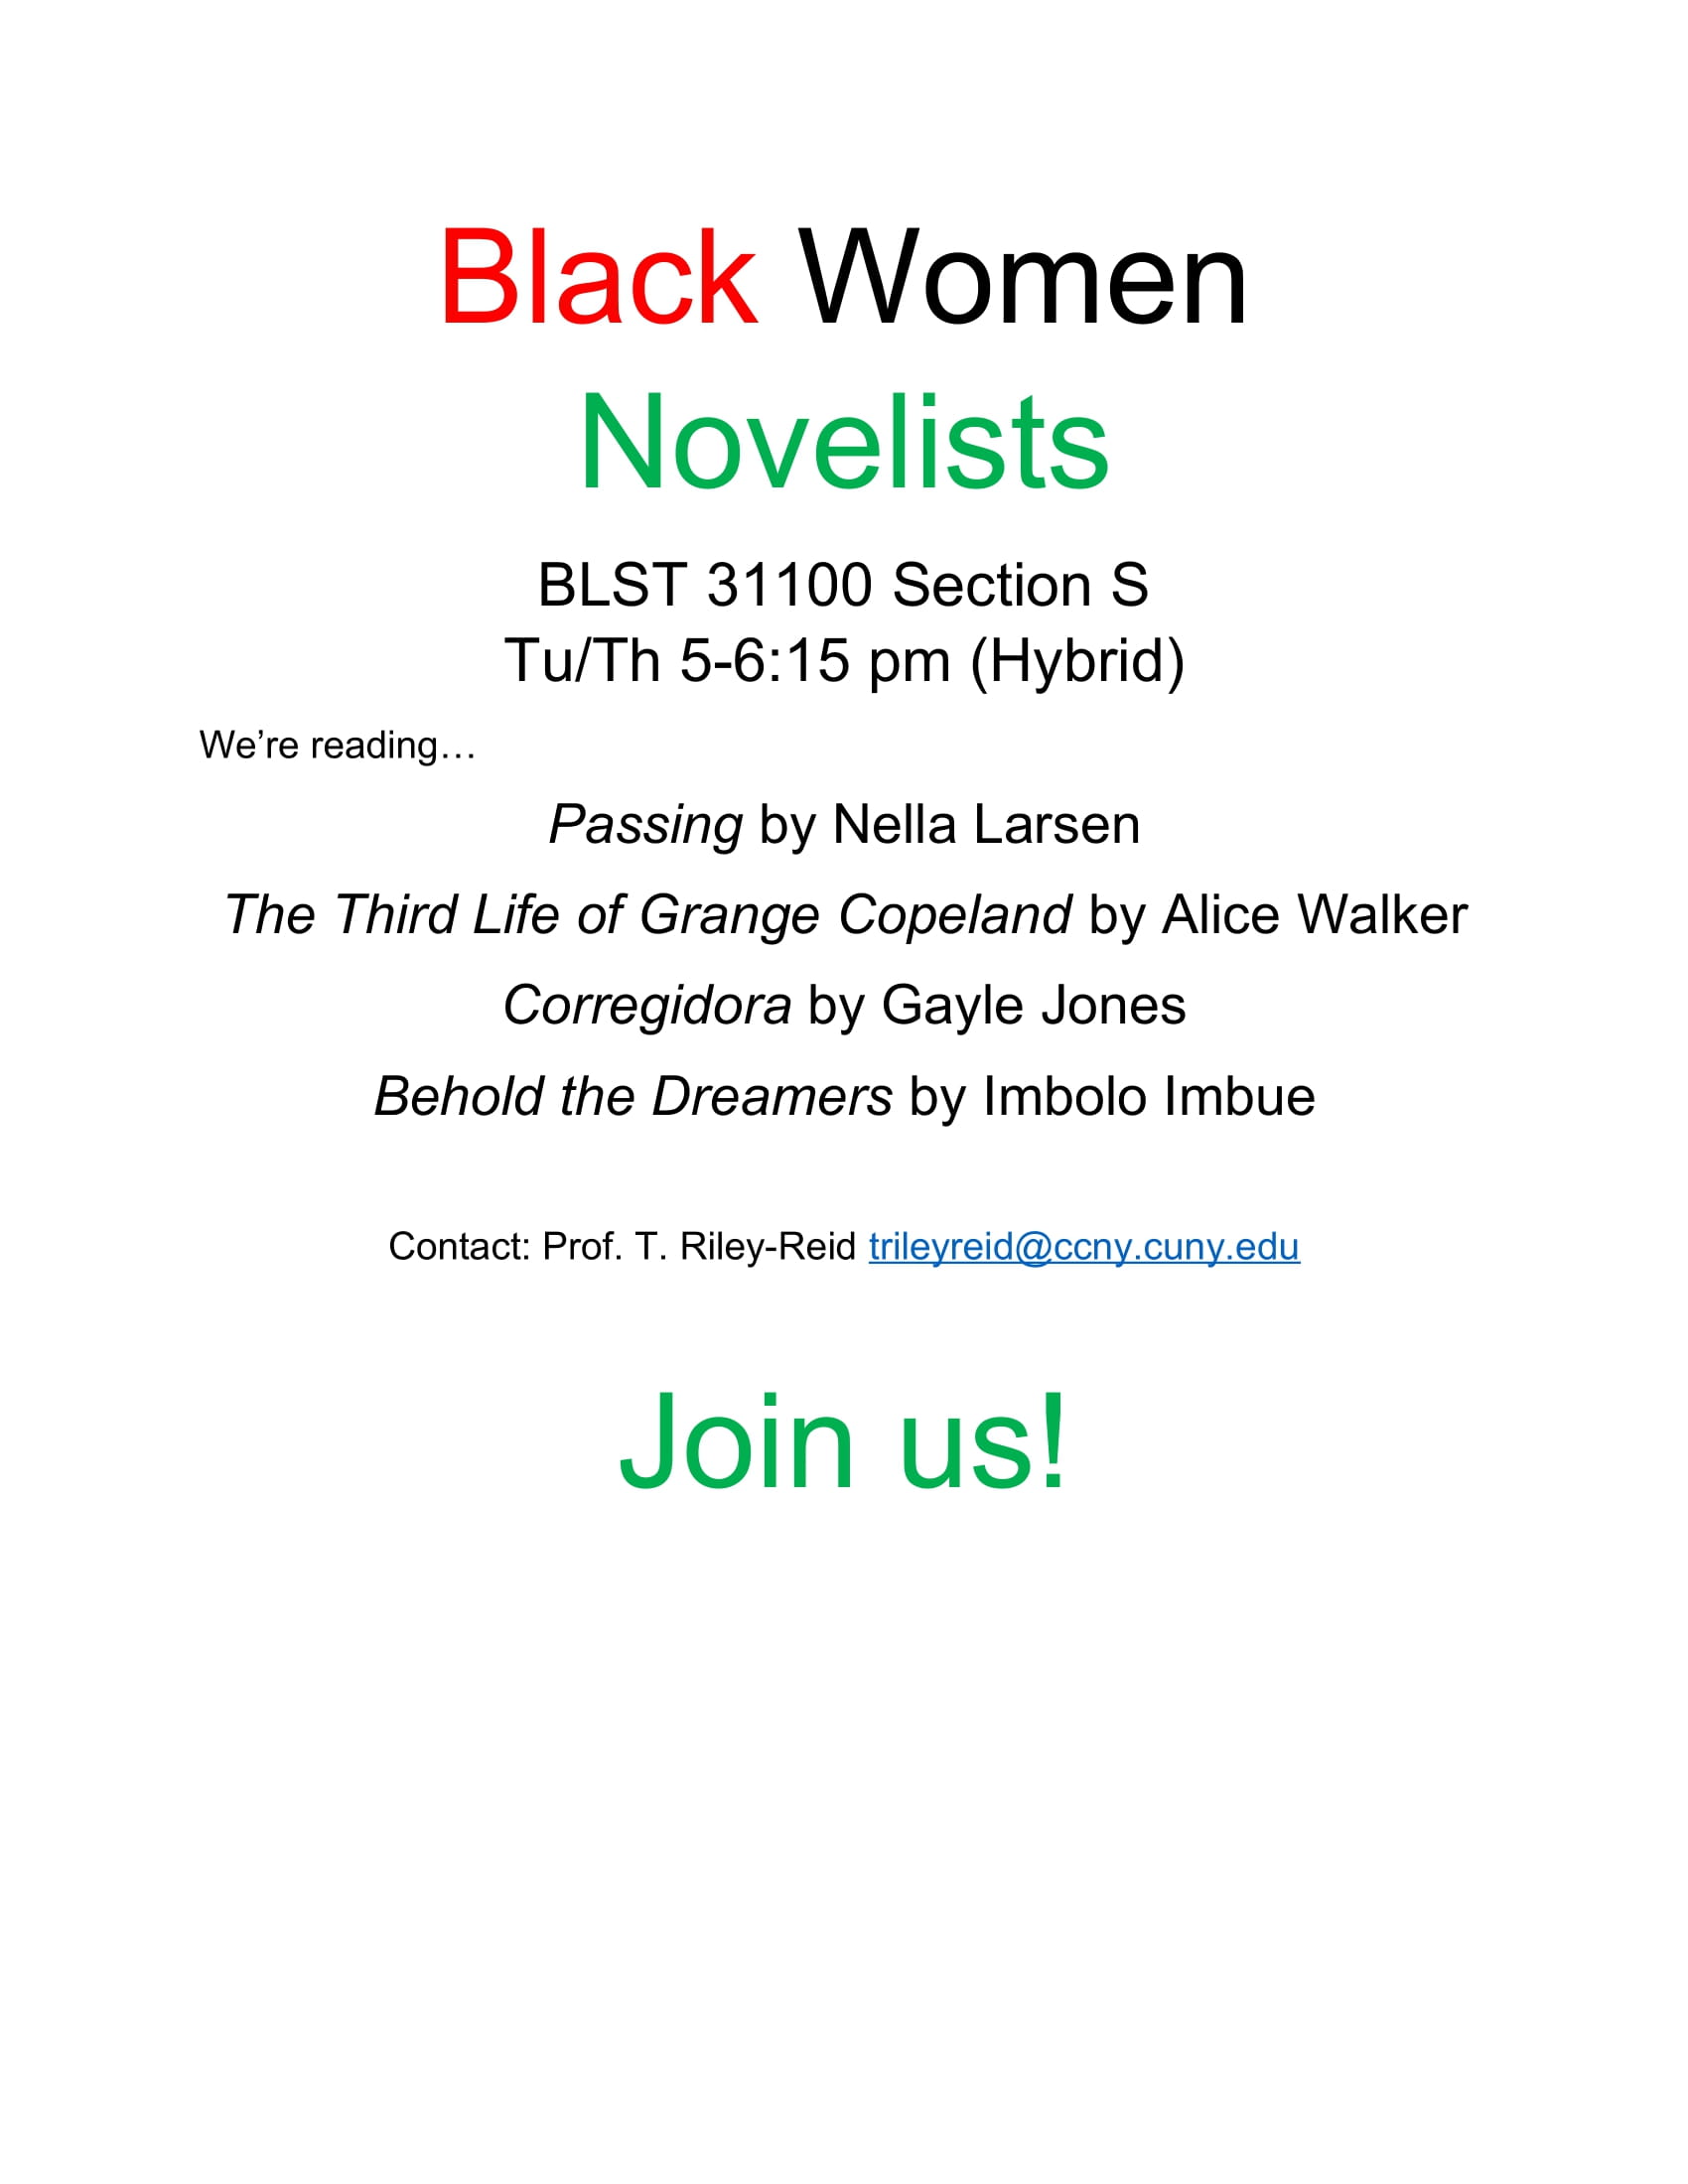 Black women novelists 